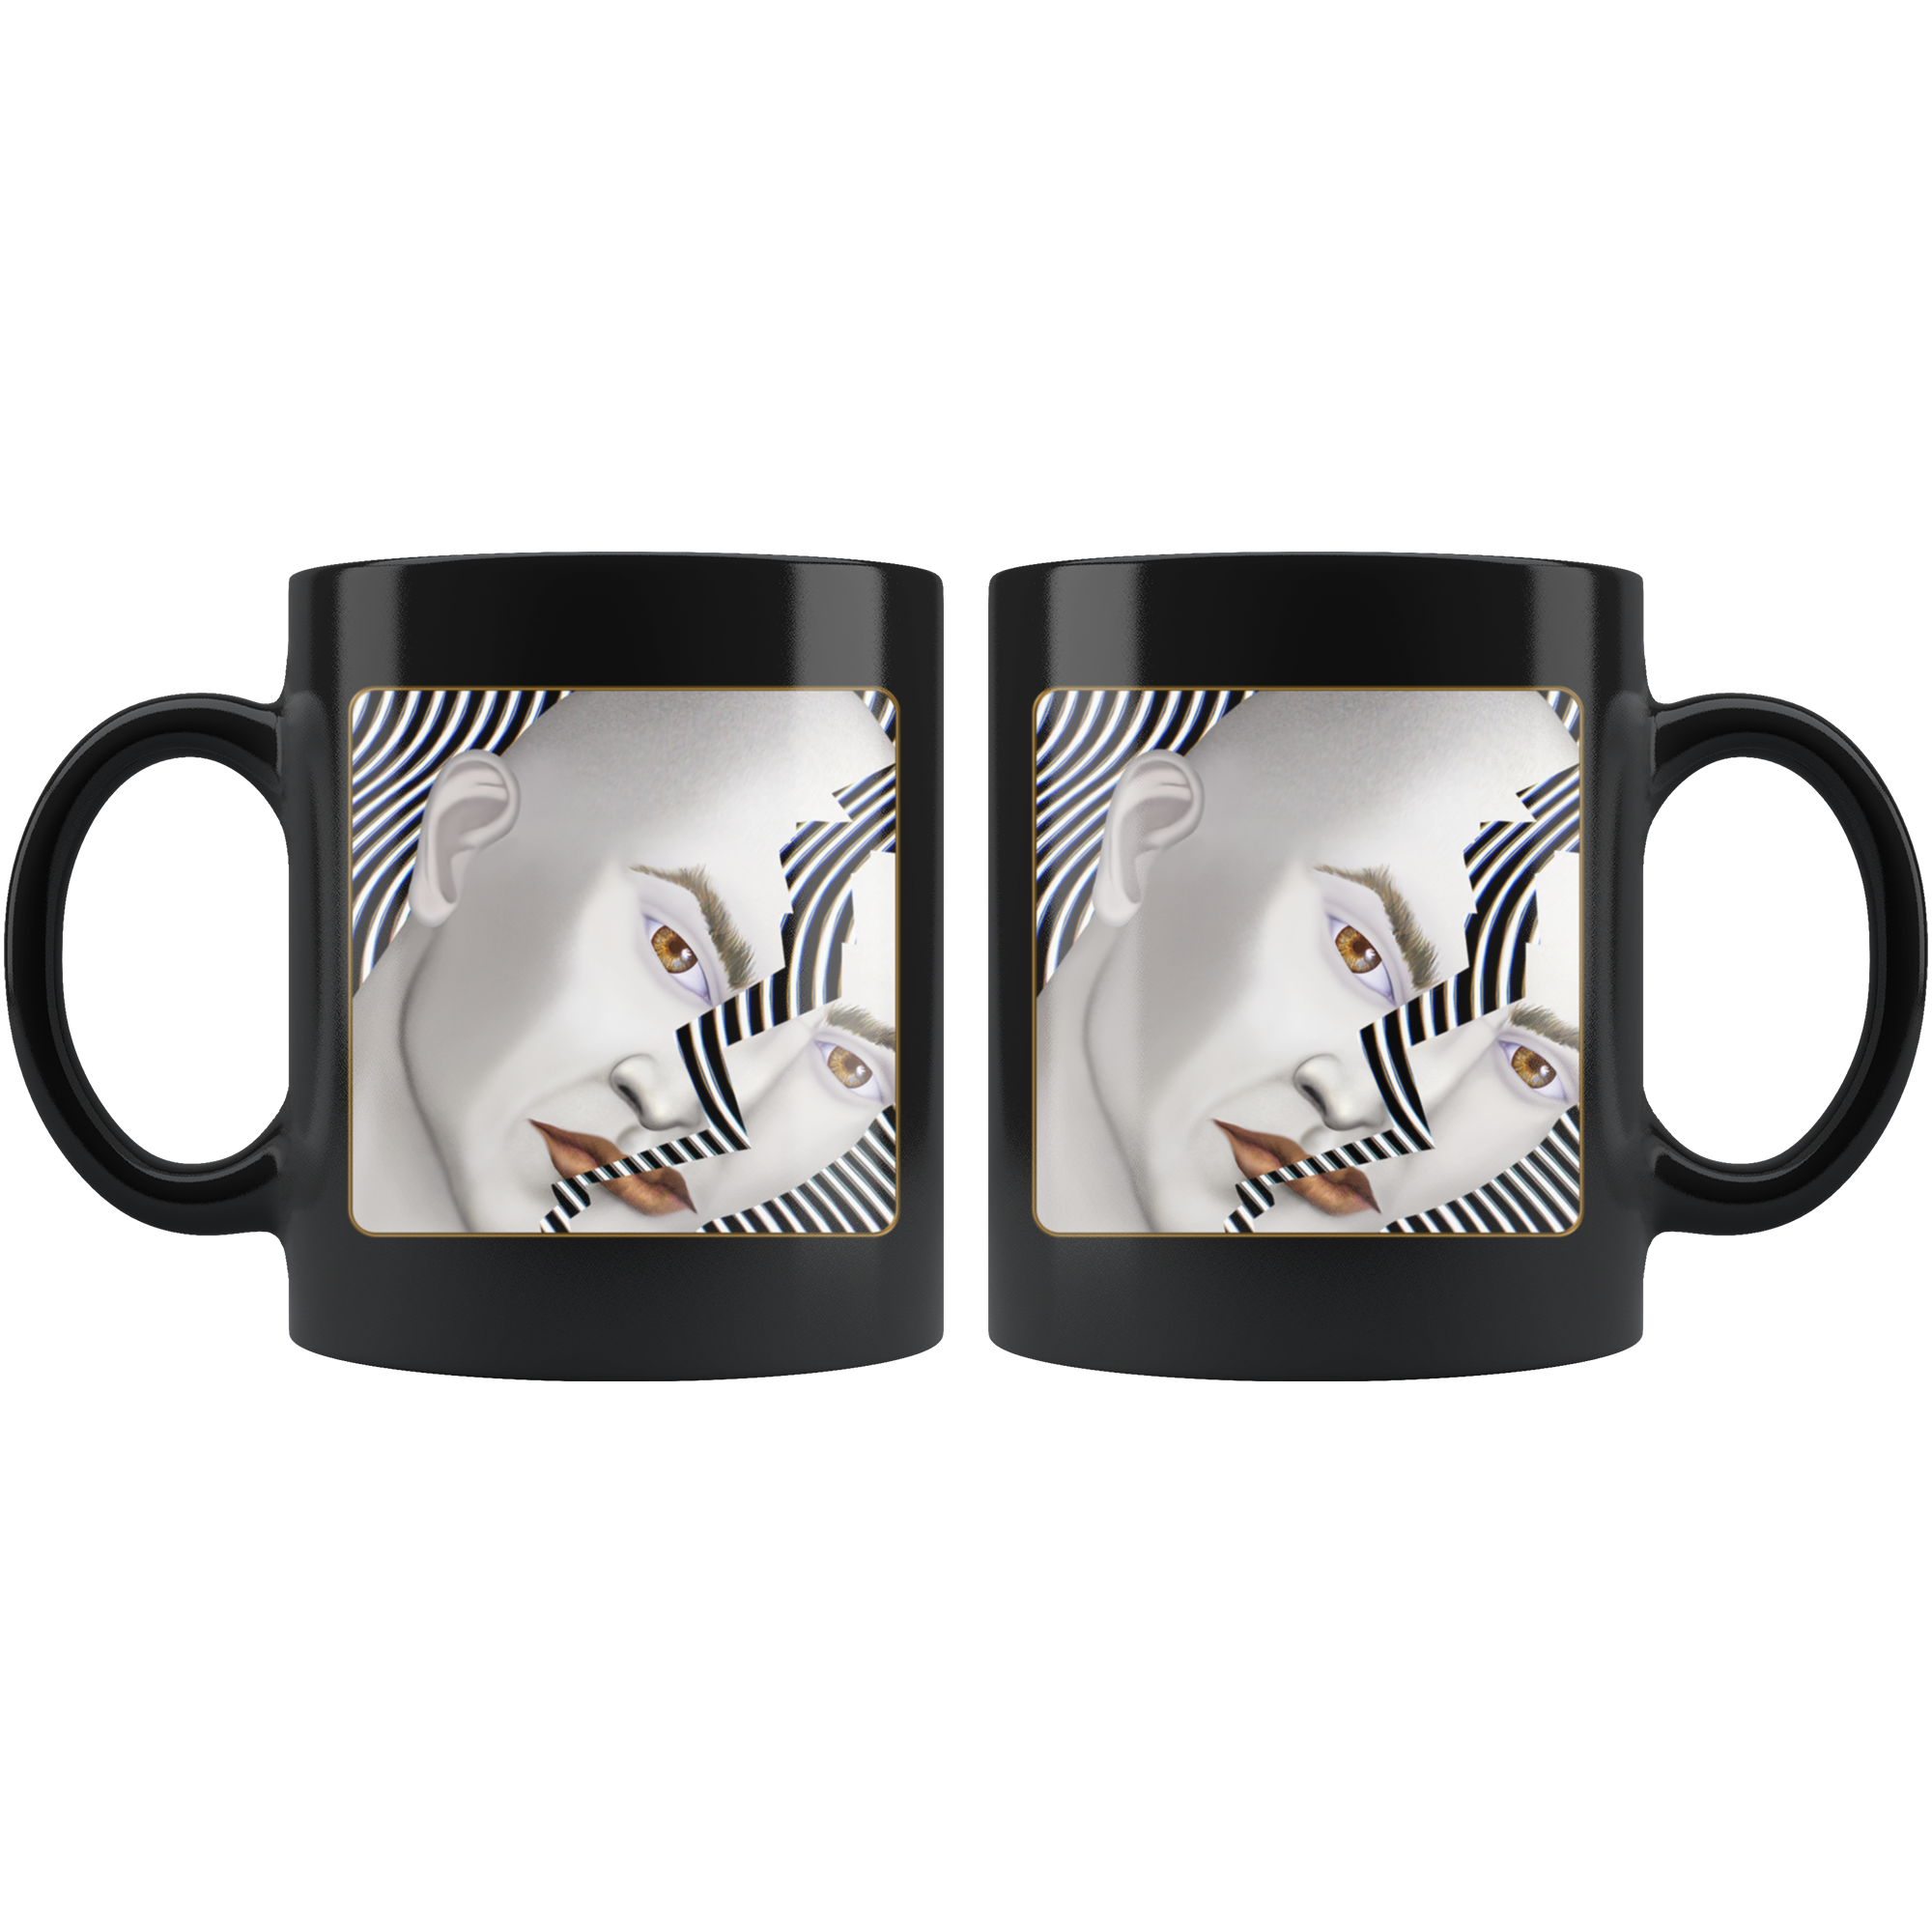 Cracked Until Coffee - 11 oz black mug